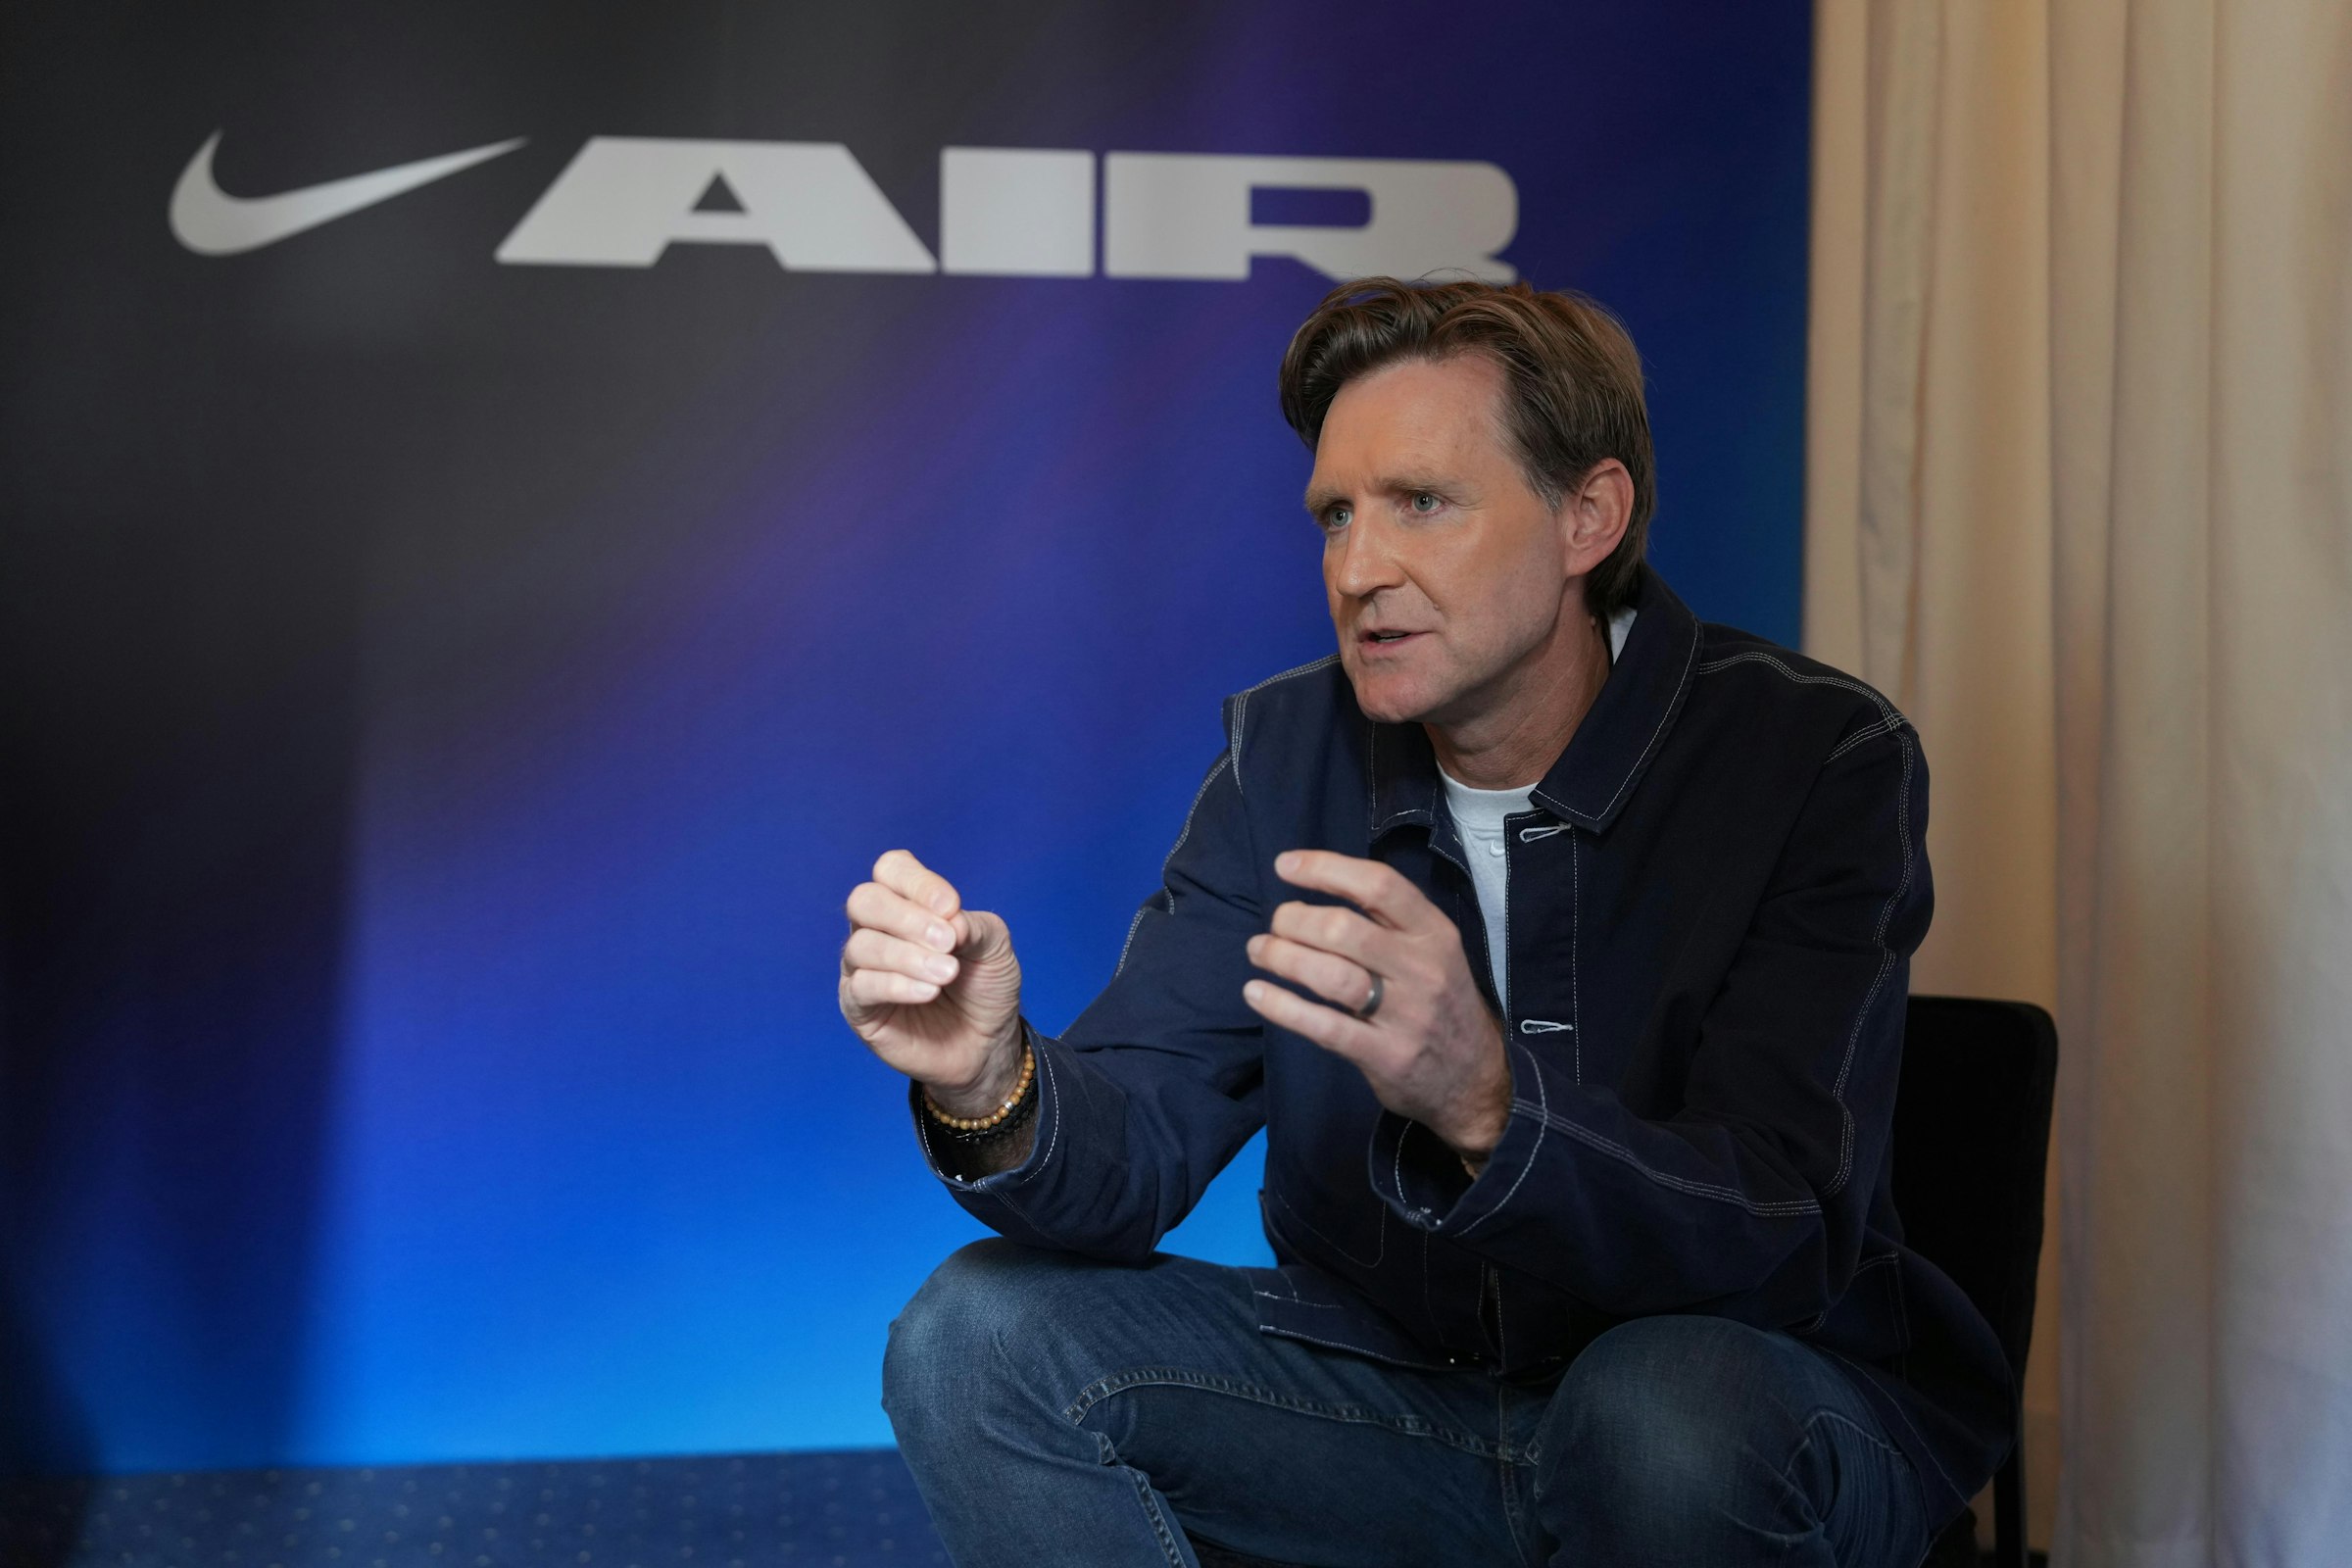 「Nike On Air」の会場でインタビューに答えてくれたNSRLのマシュー・ナース氏